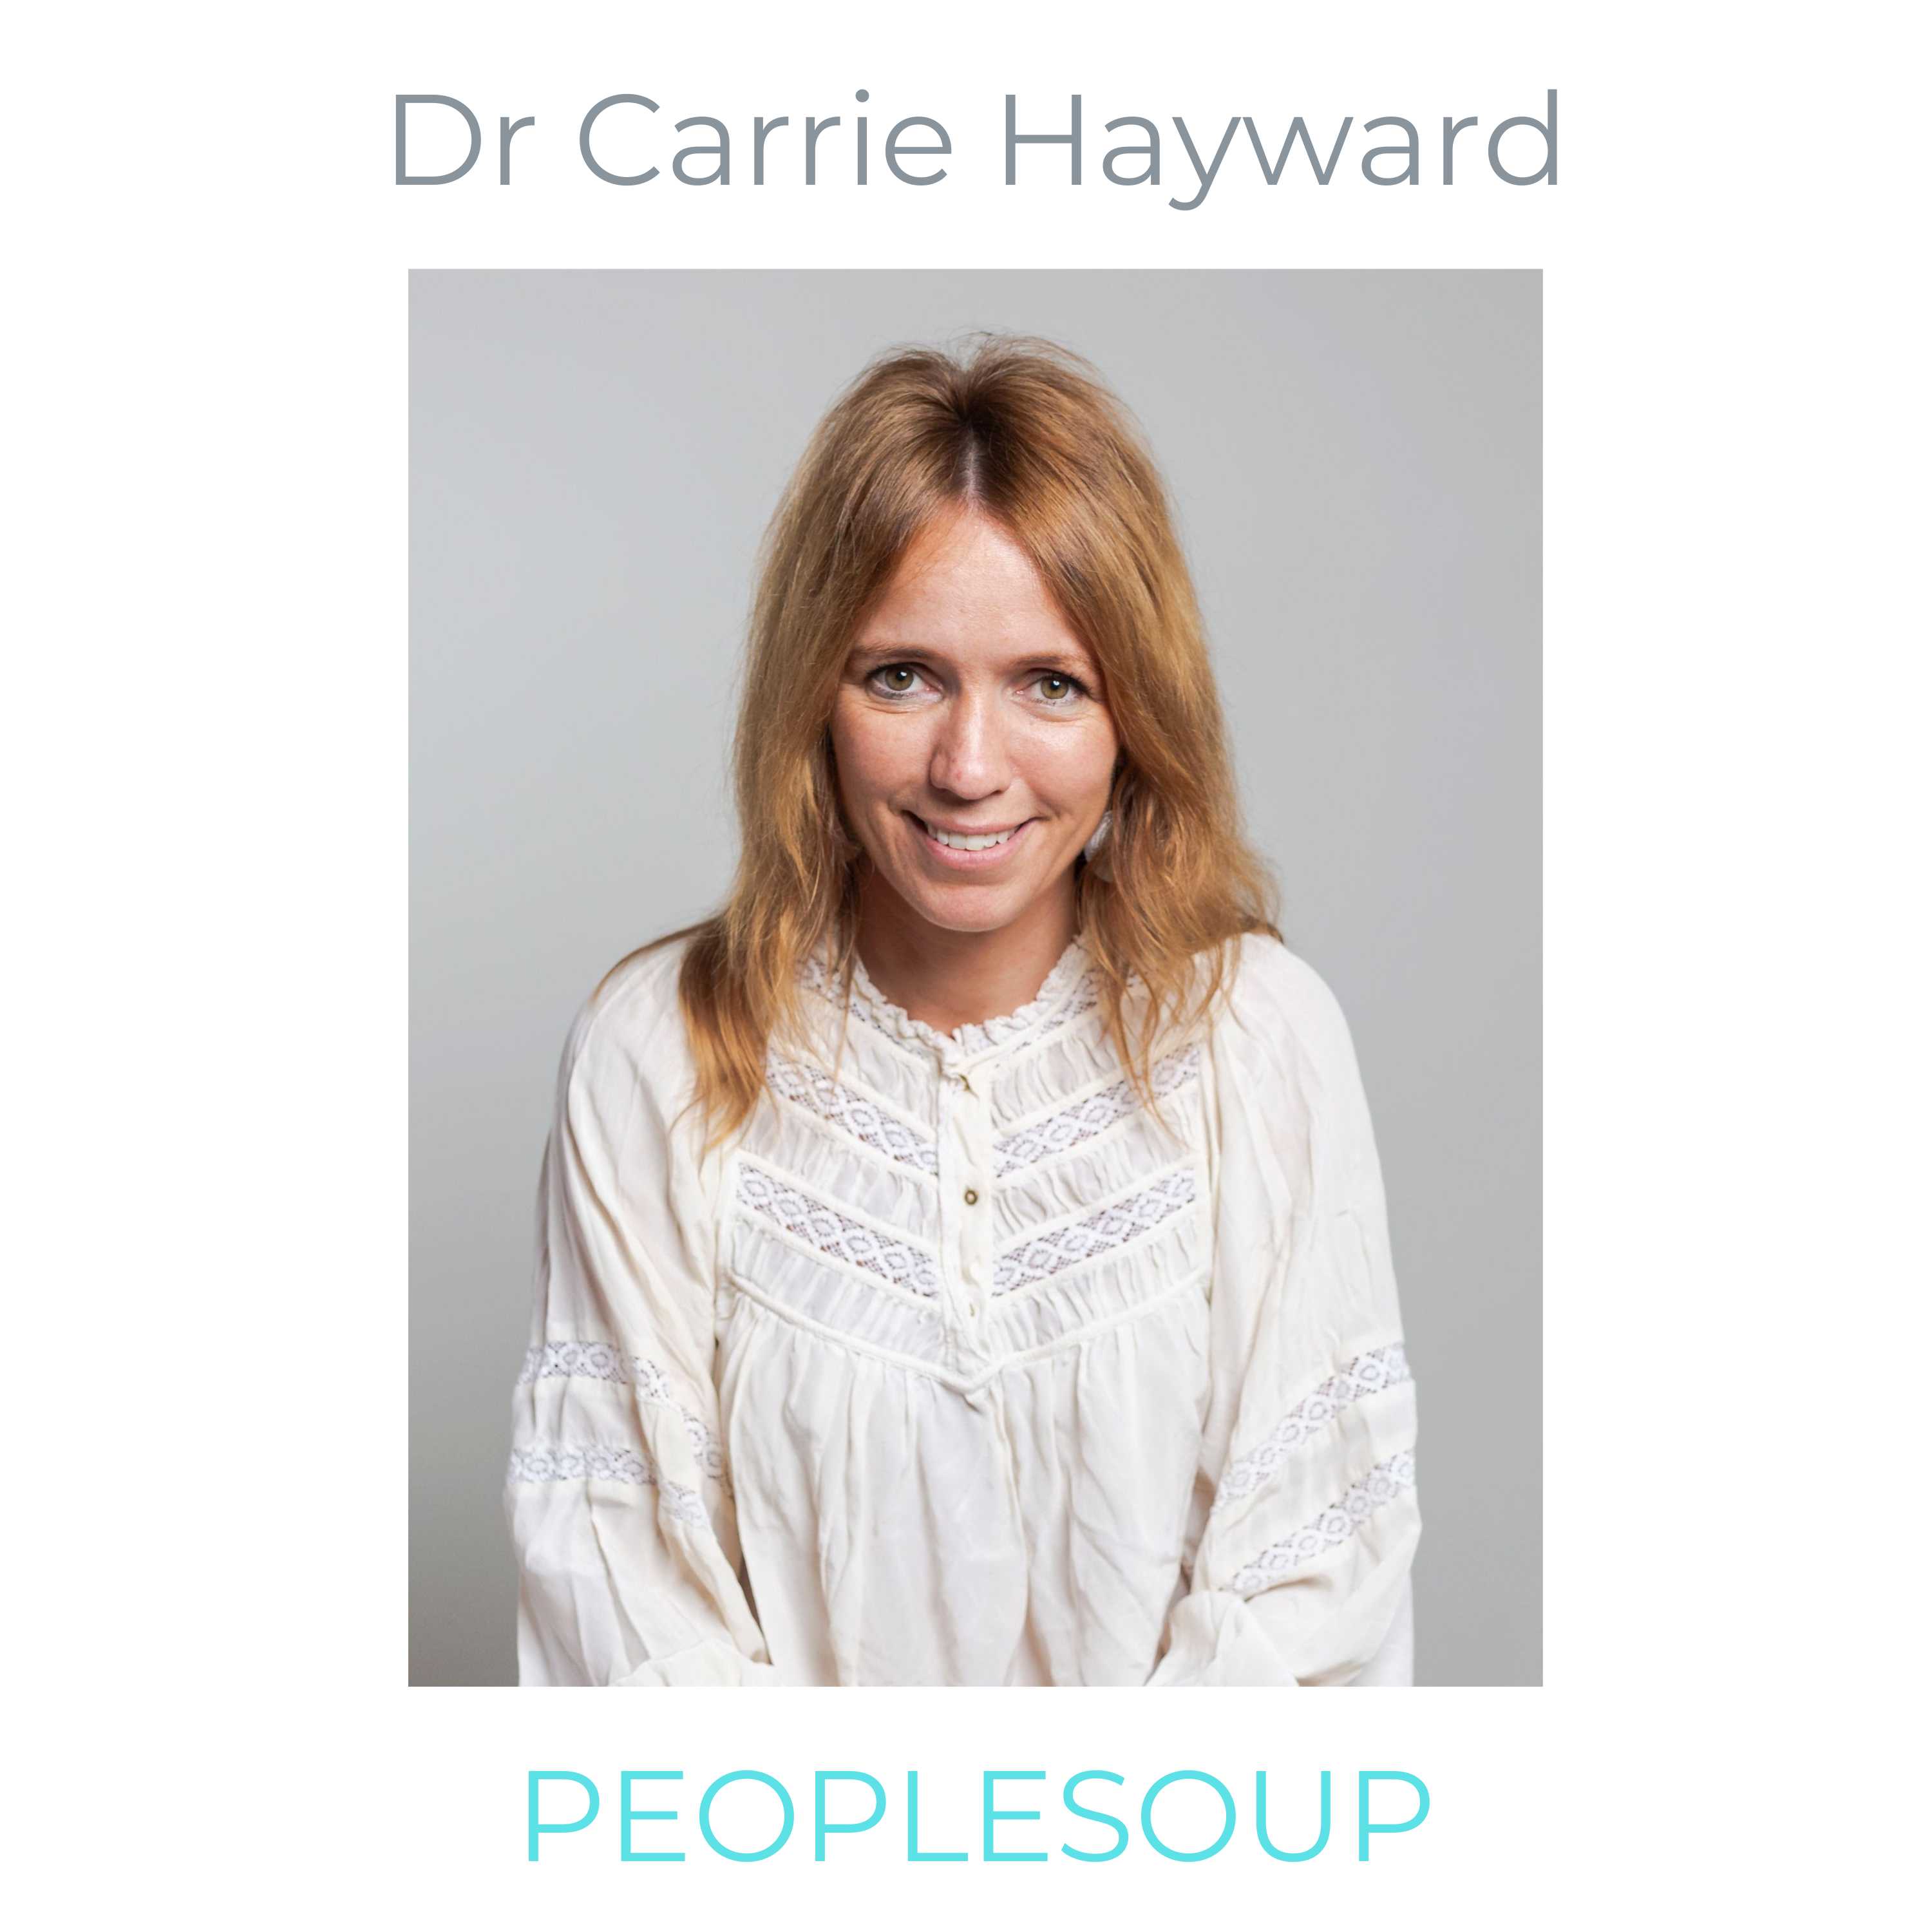 Meet Dr Carrie Hayward